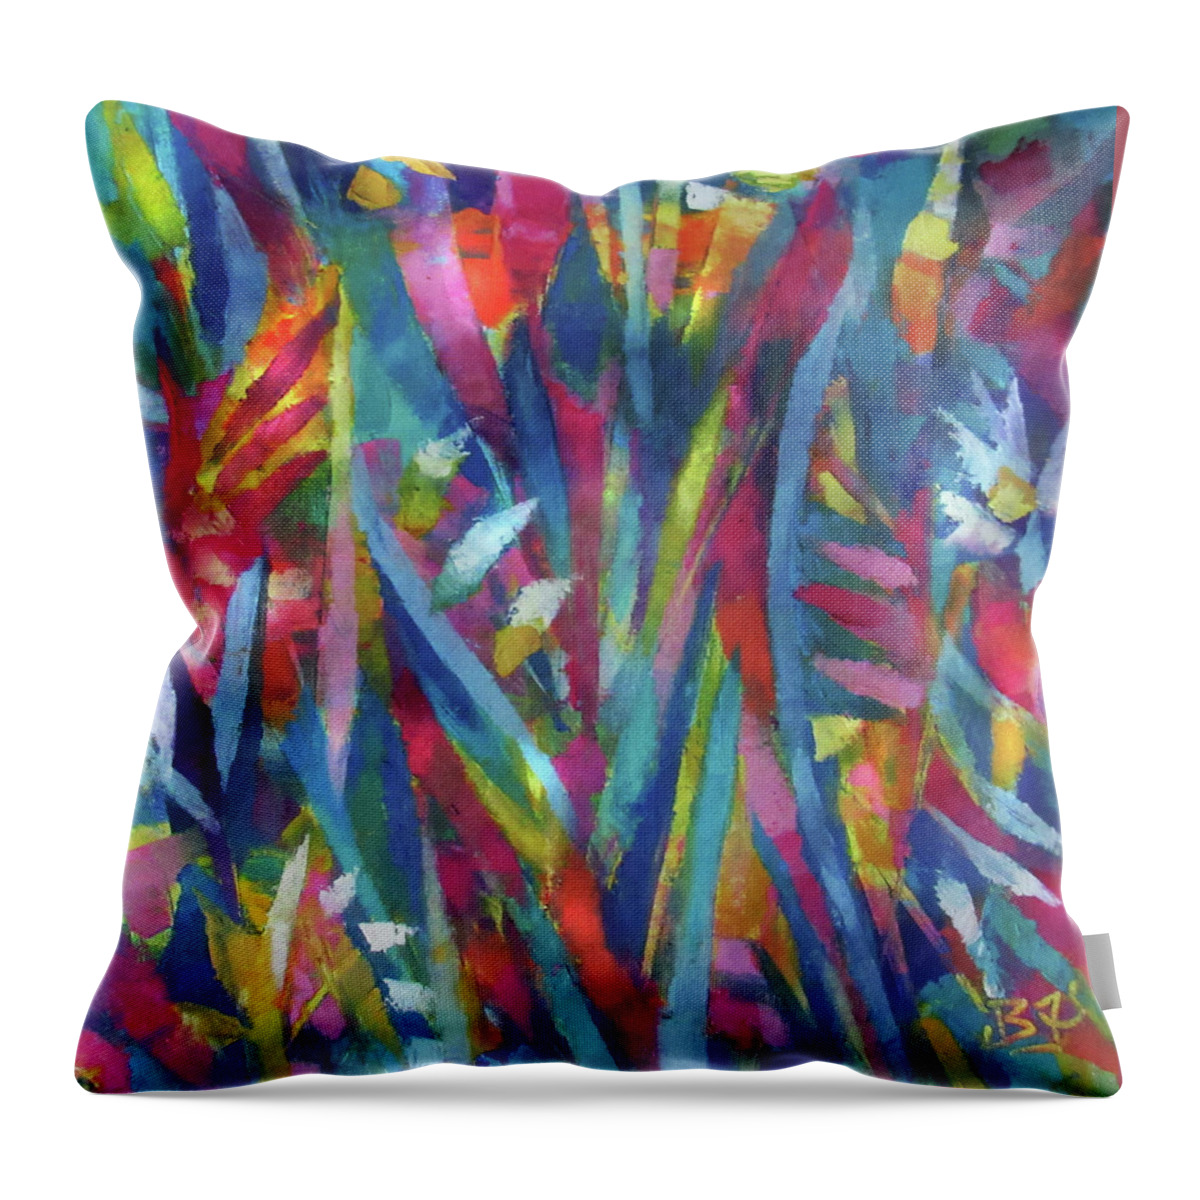 Colorful Abstract Garden Throw Pillow featuring the digital art Garden Abstract 5-7-20 by Jean Batzell Fitzgerald